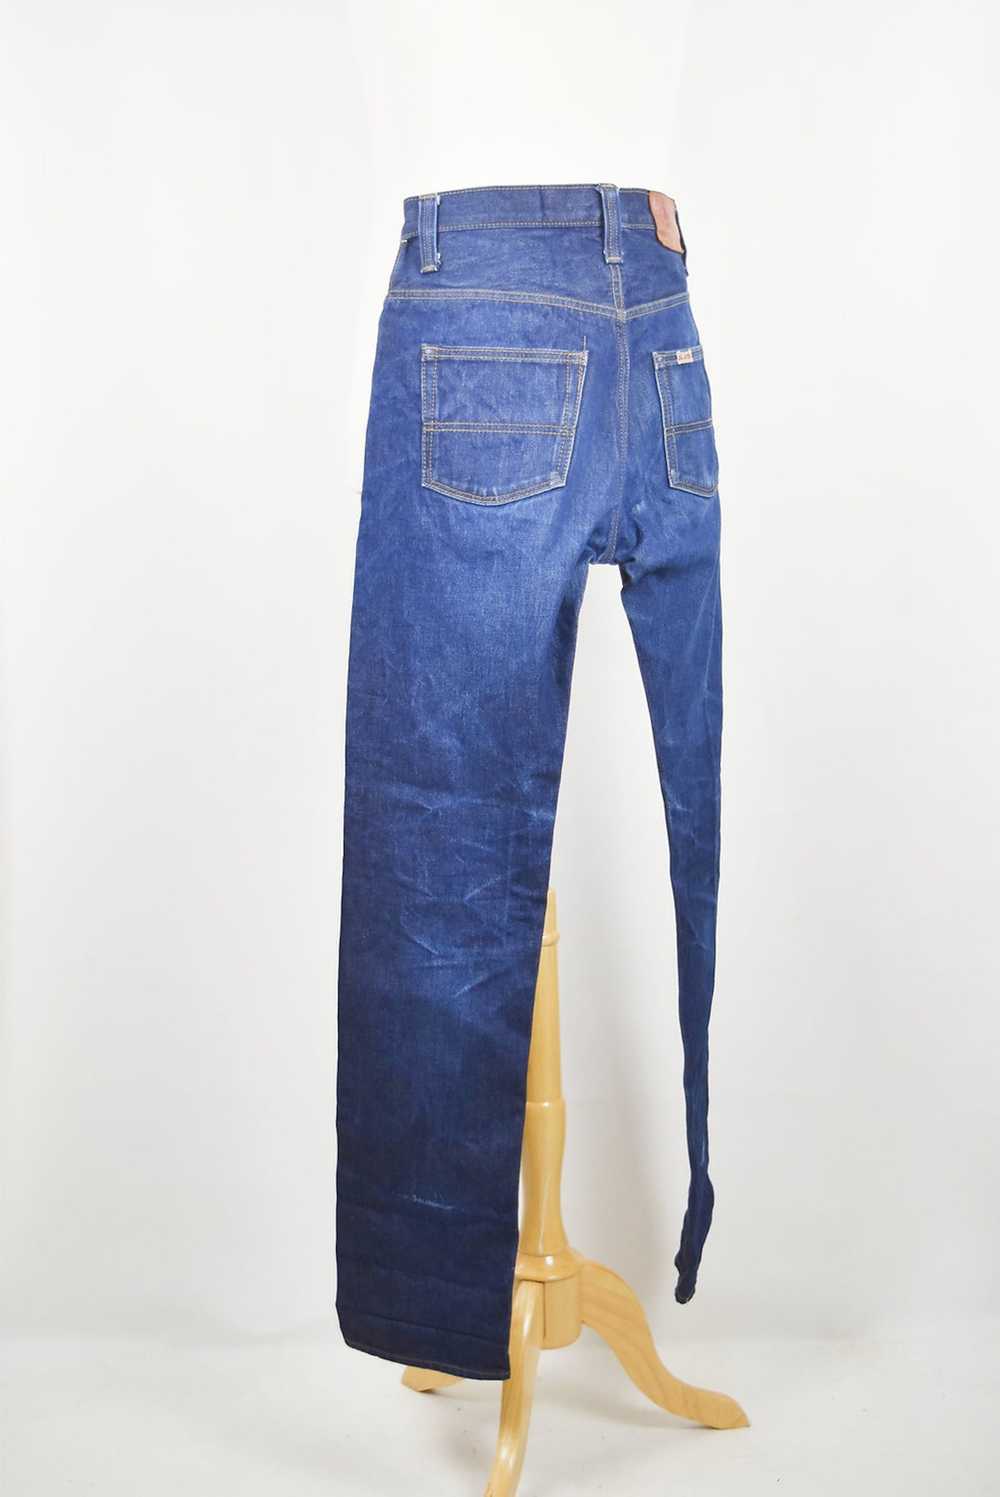 Big John Jeans - image 6